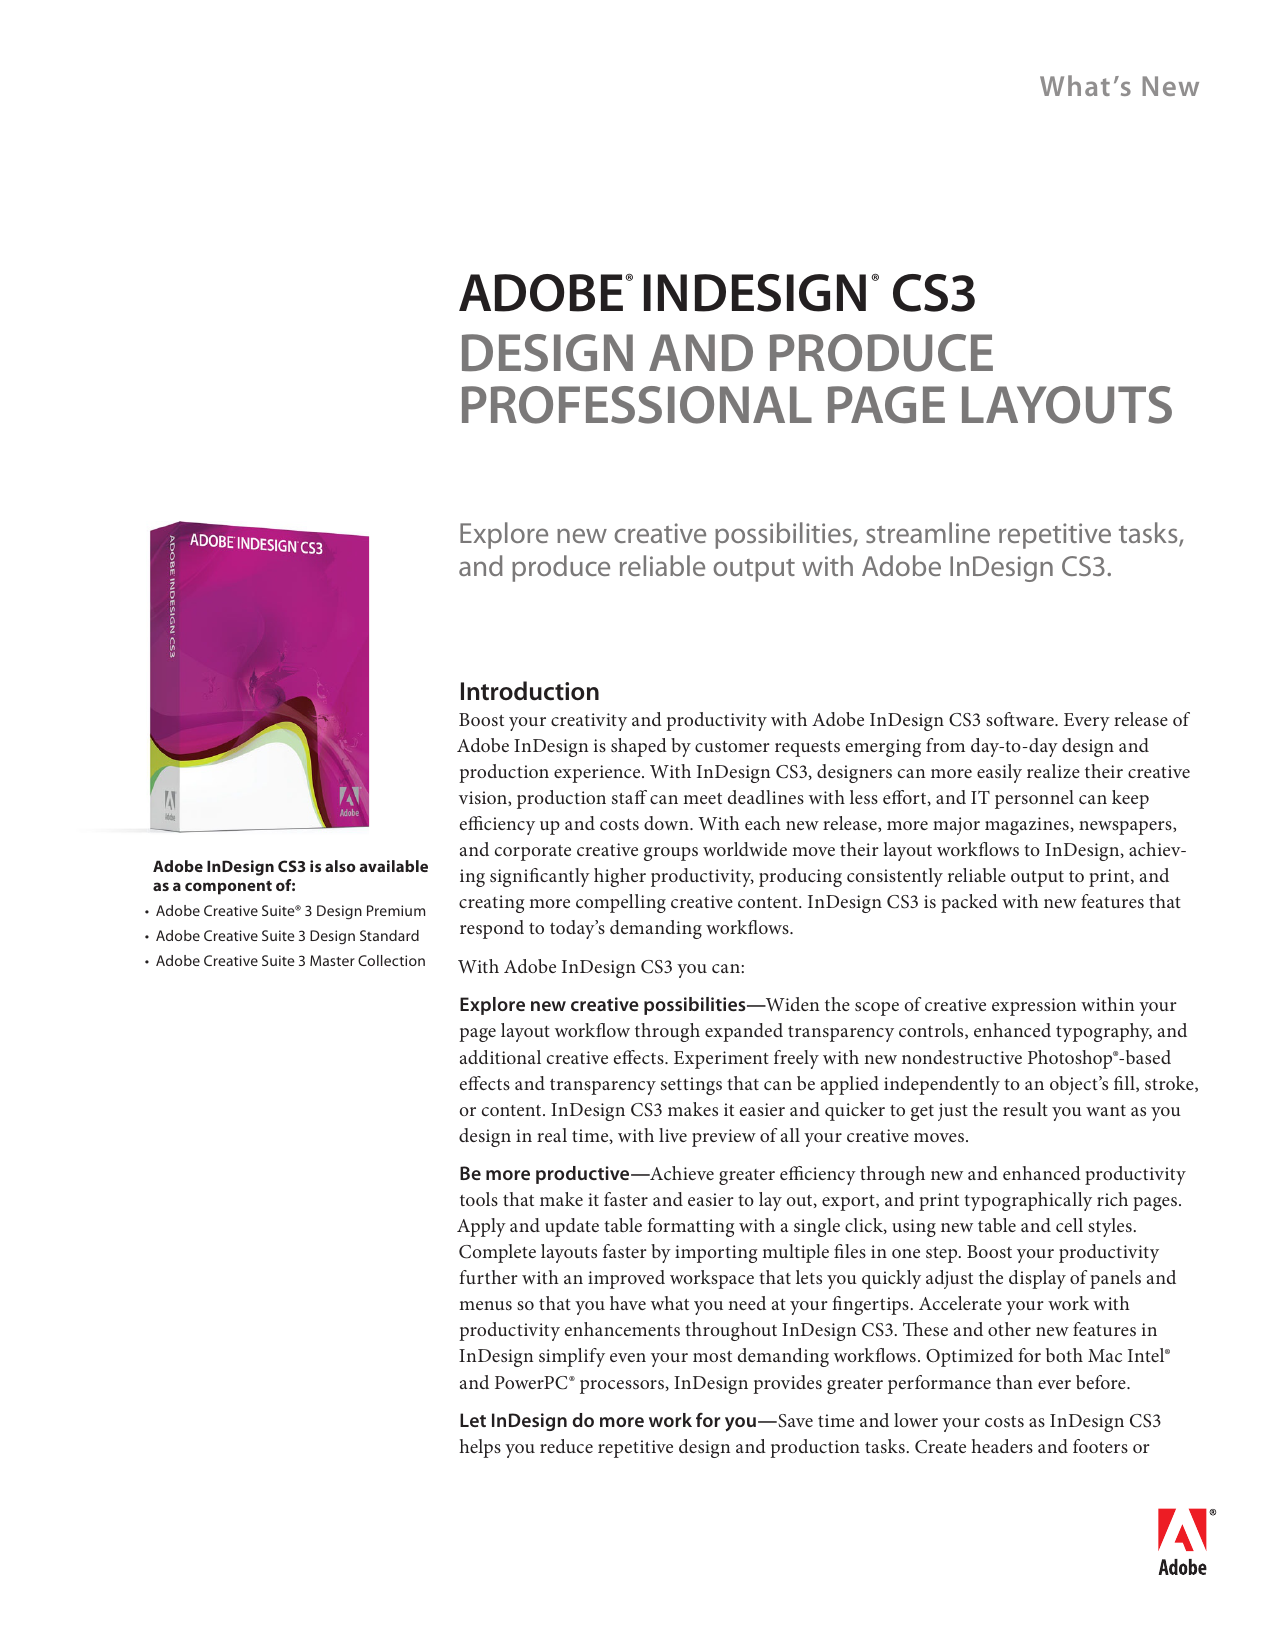 adobe indesign cs3 windows 10